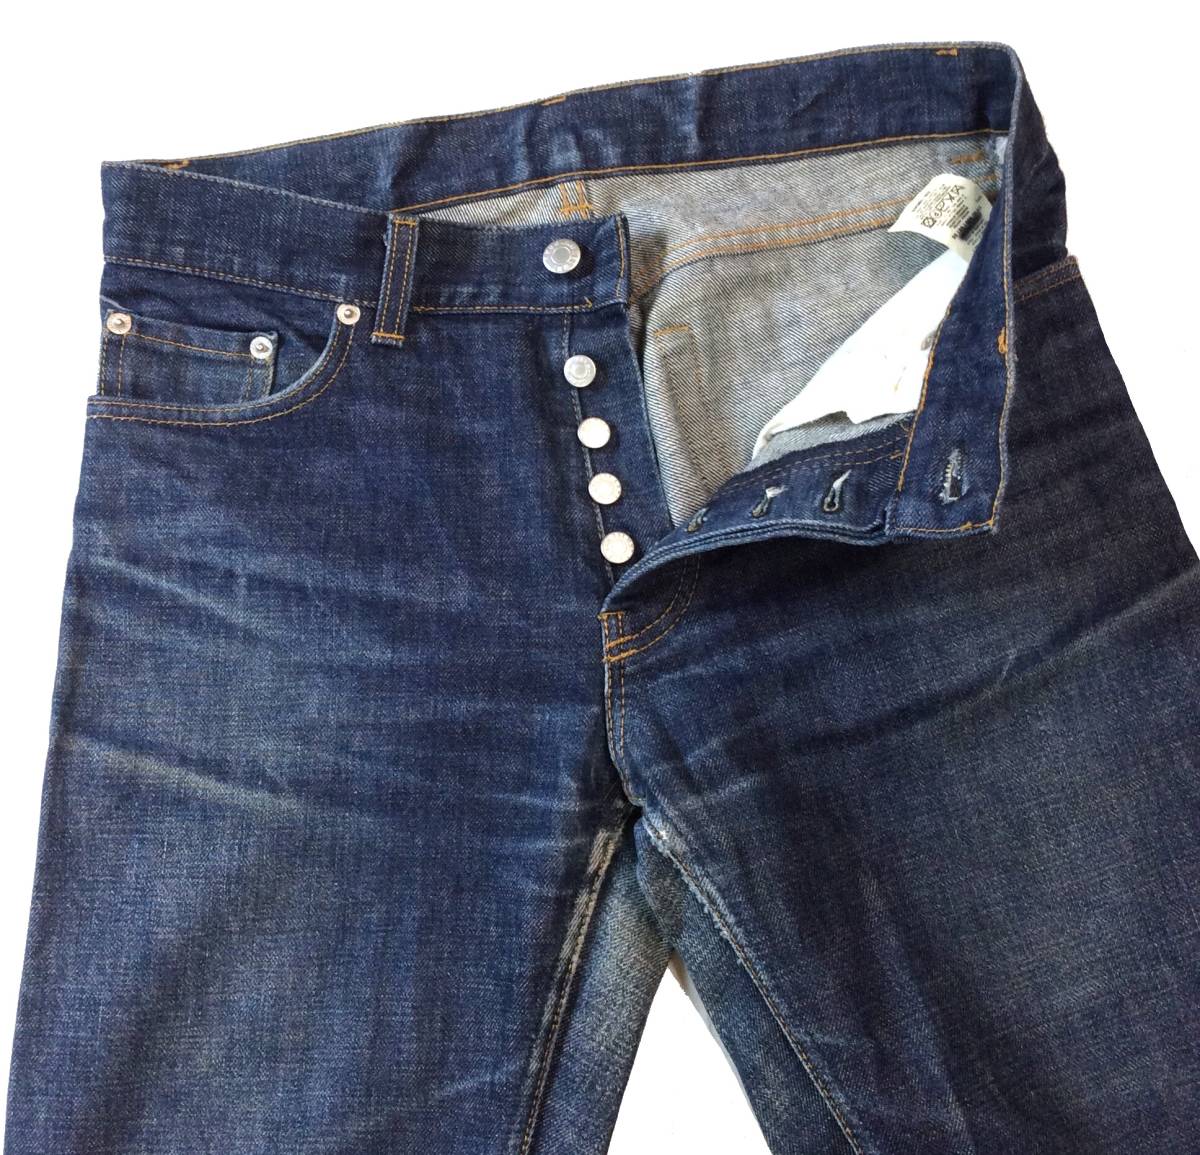 HELMUT LANG Helmut Lang ITALY made Denim pants jeans men's 30 (ma)